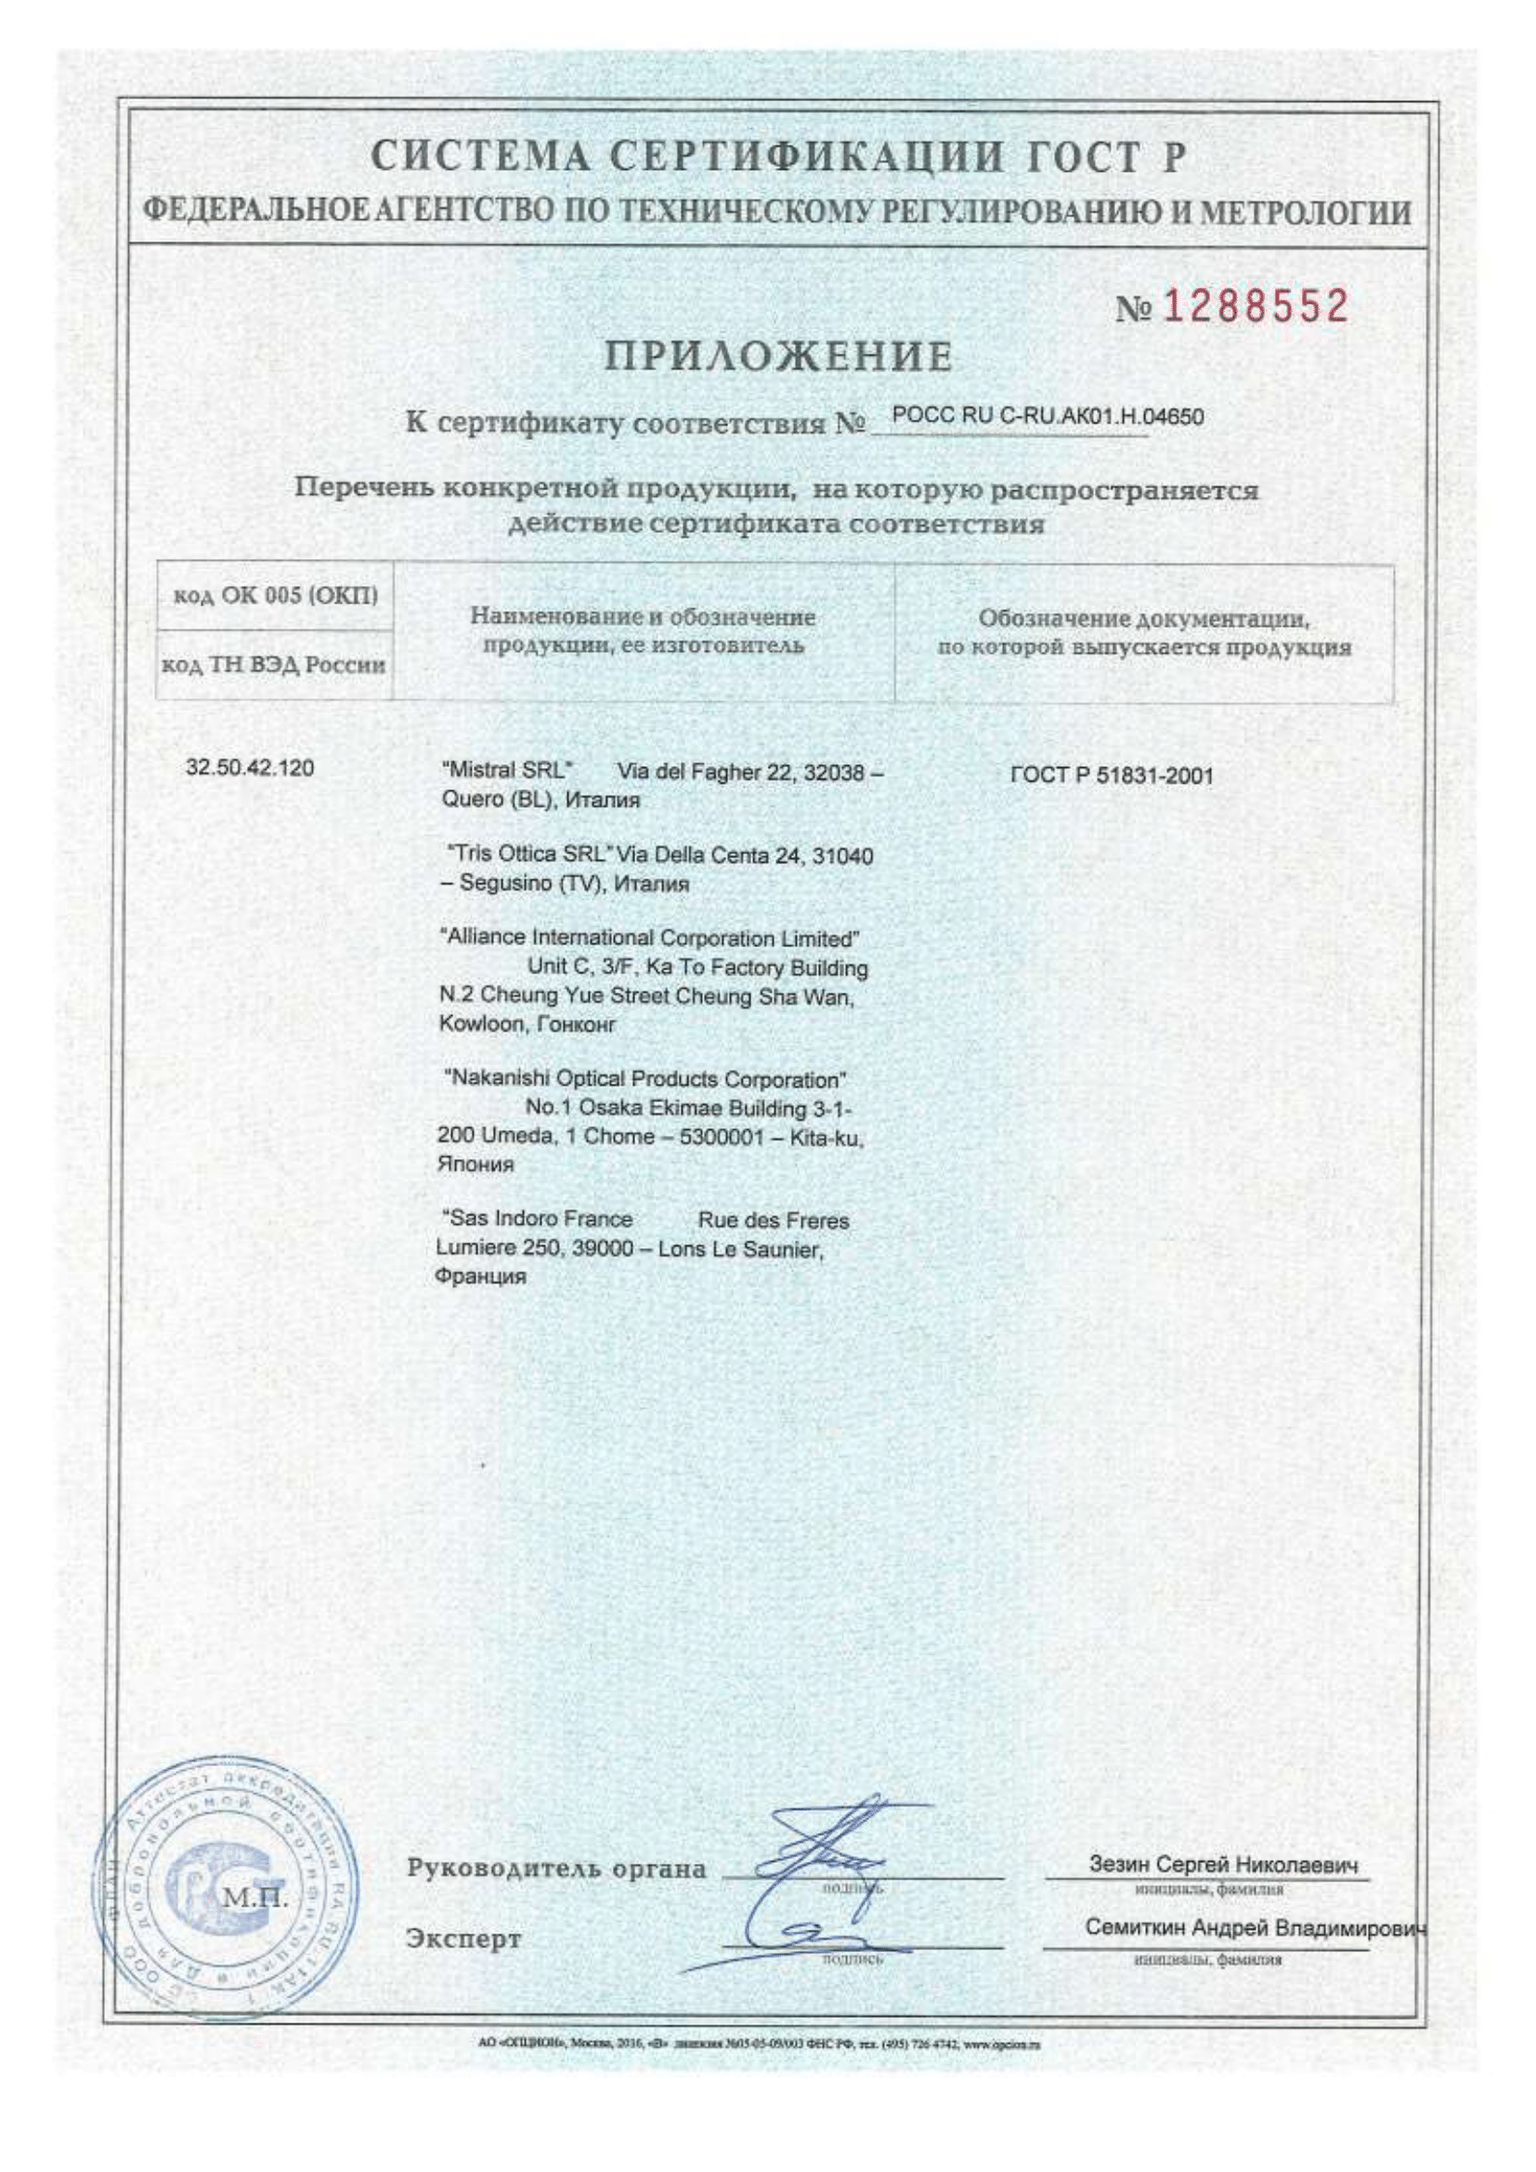 /images/certificates/sertificate4-2.png